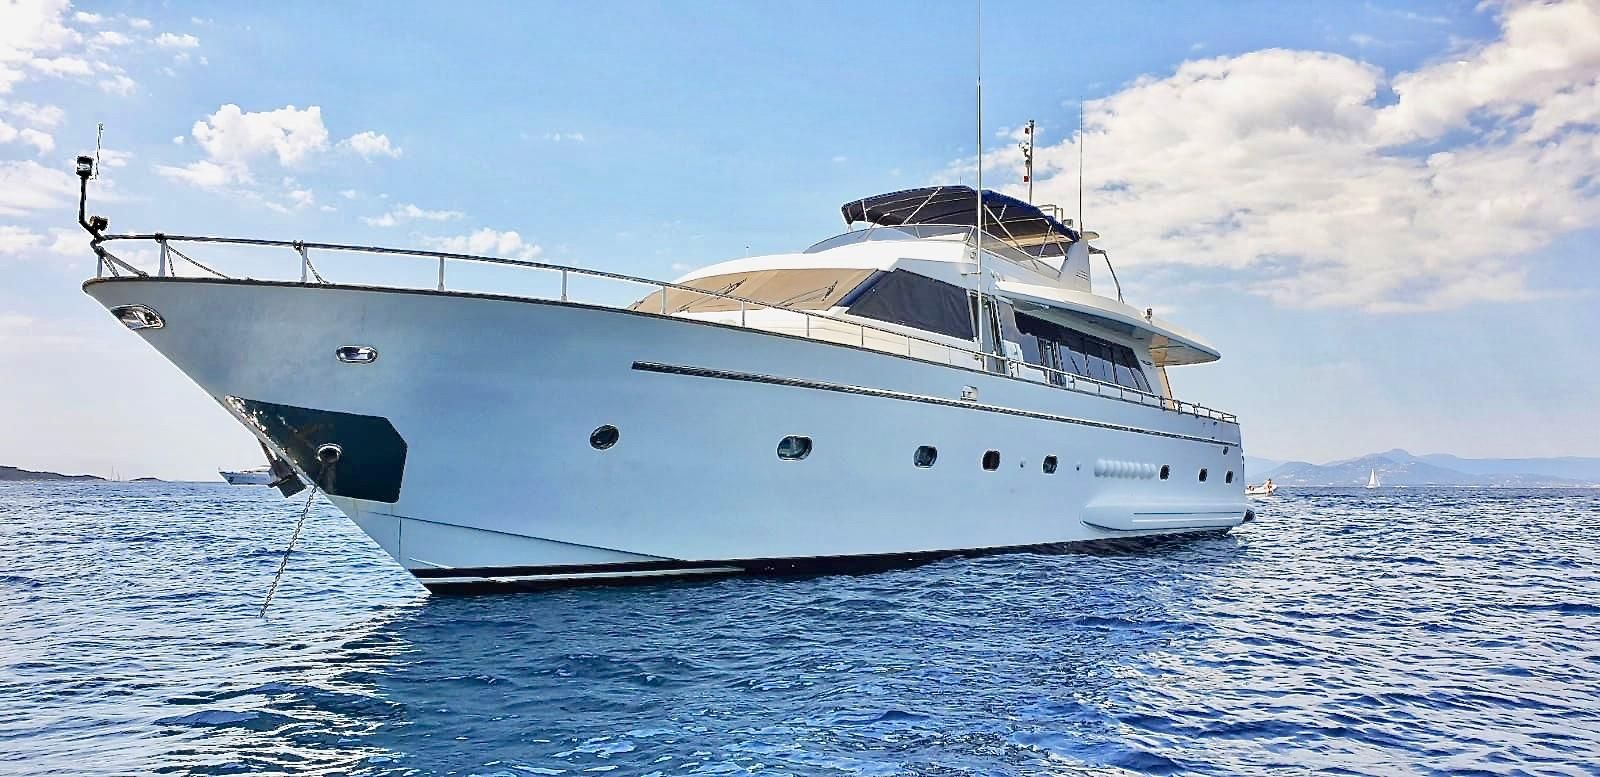 versilcraft yachts for sale